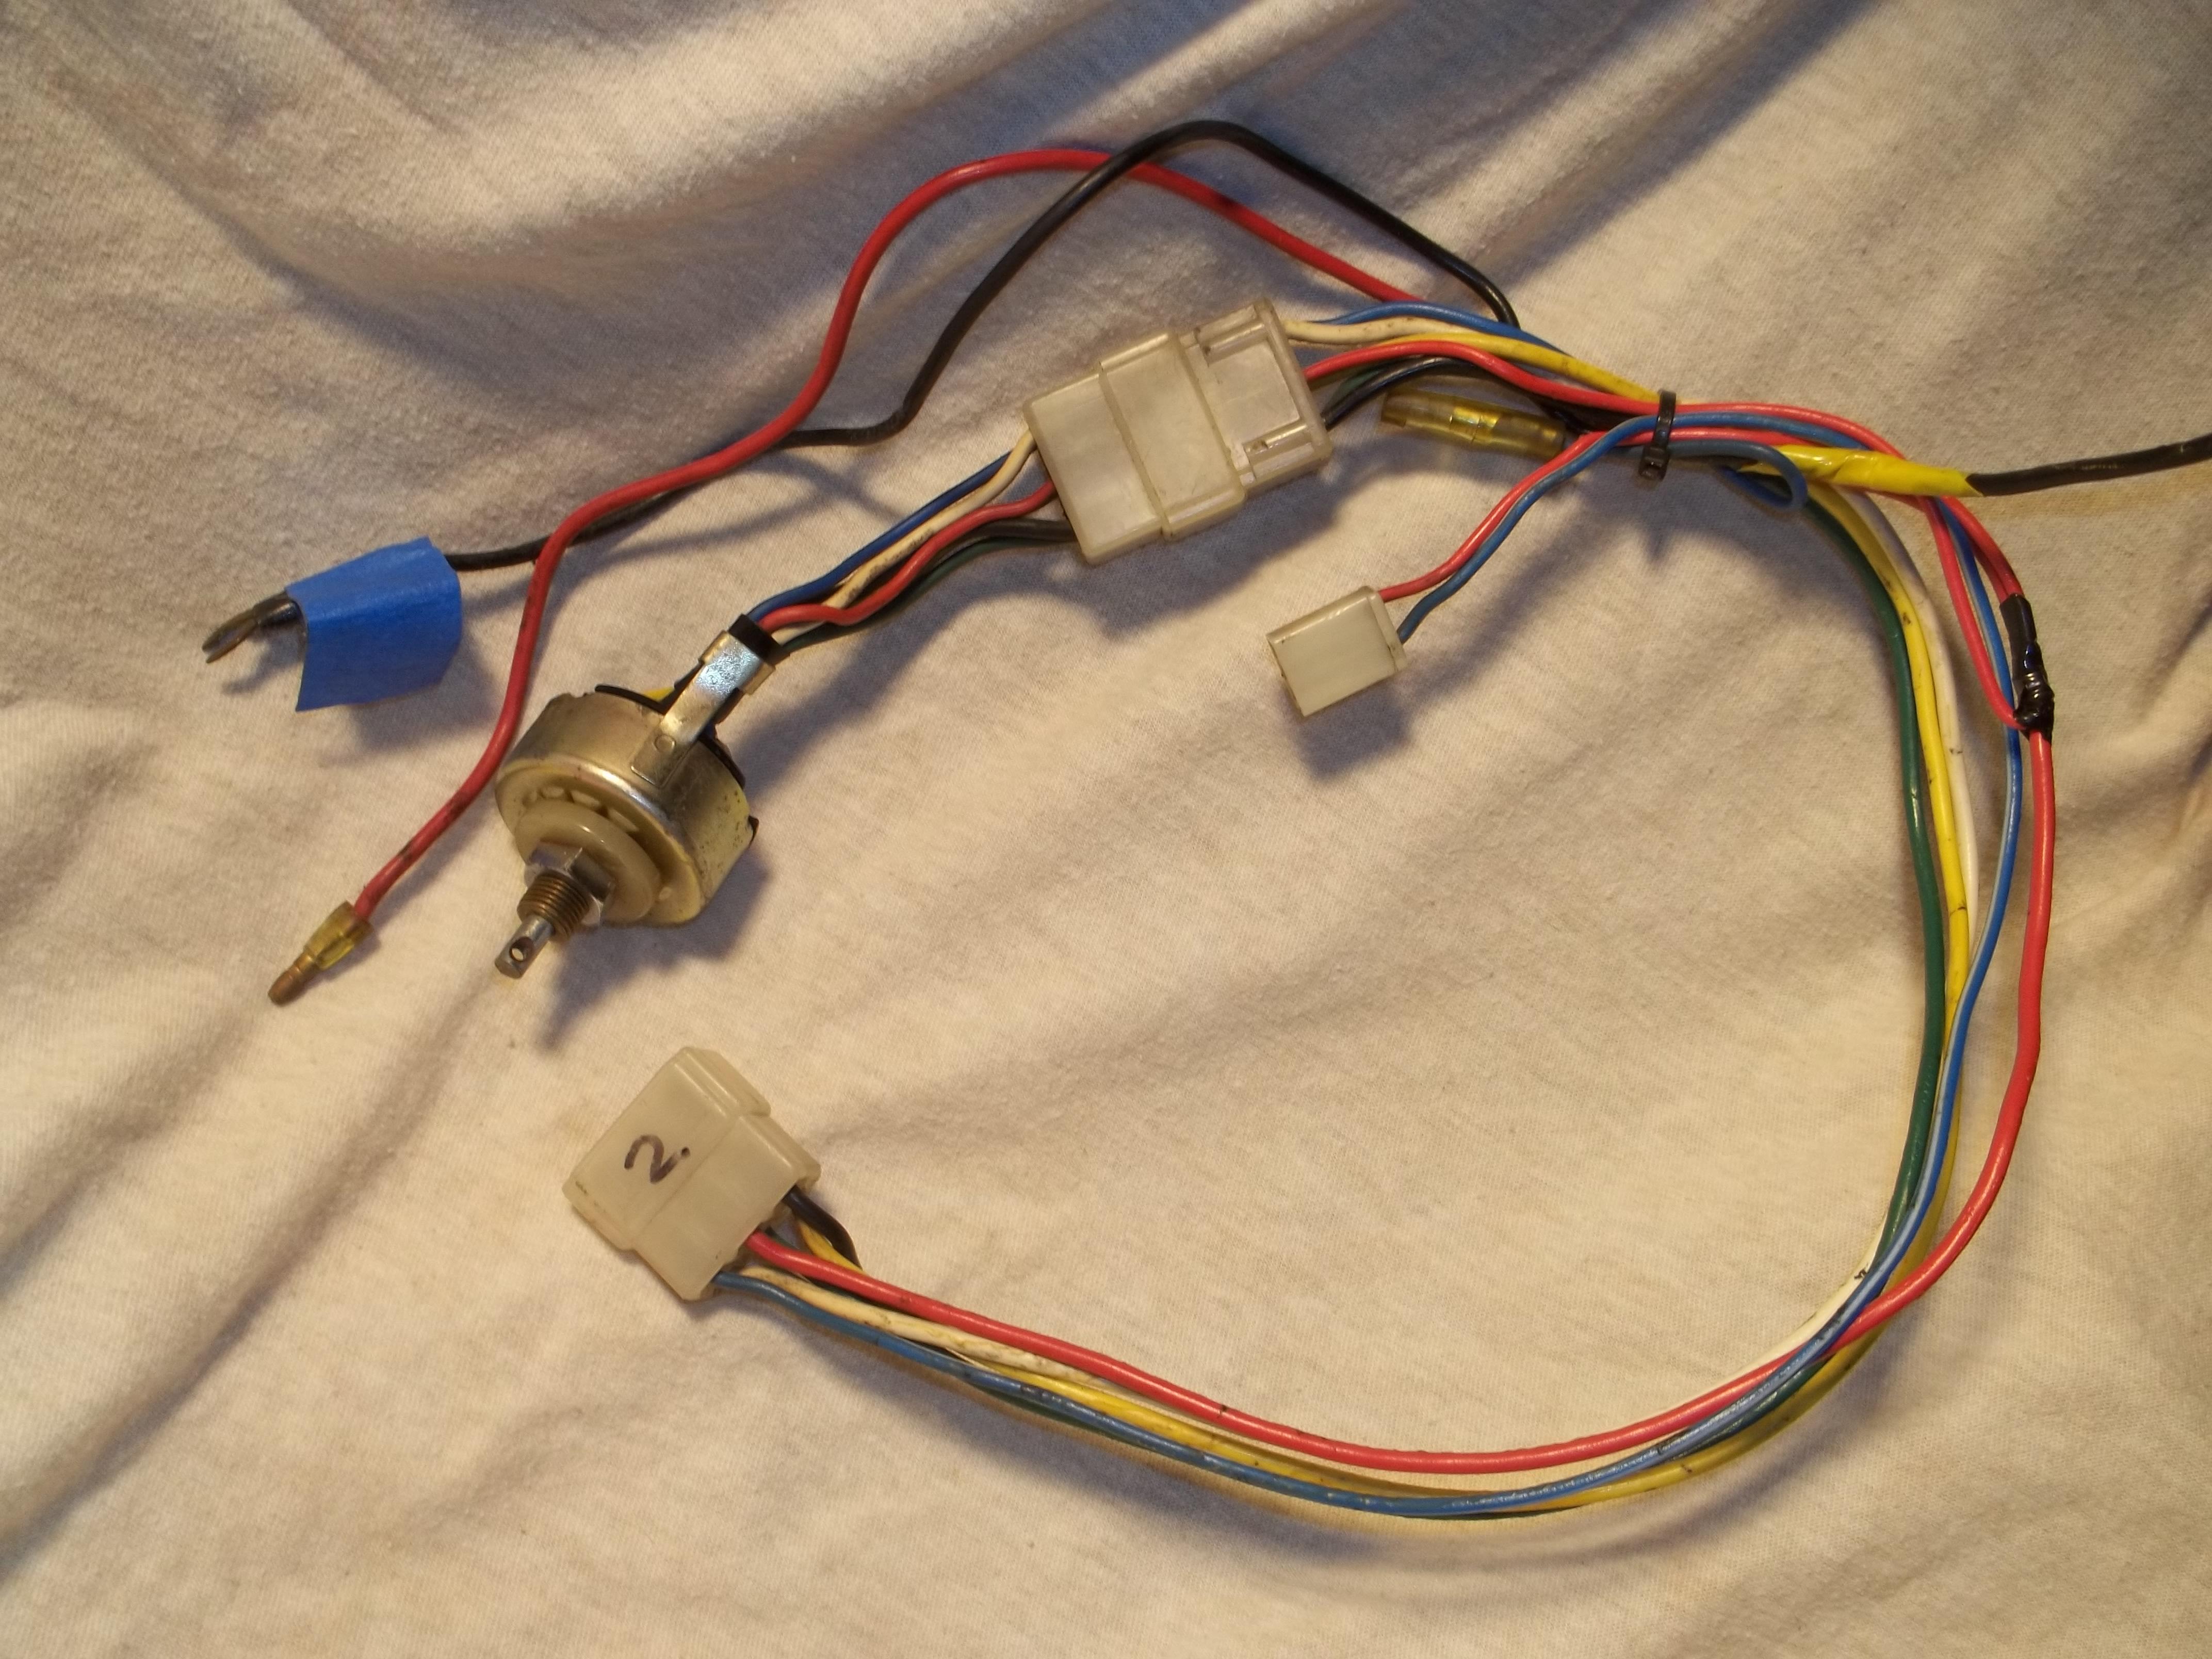 12/71 blower motor wiring help - Electrical - The Classic Zcar Club